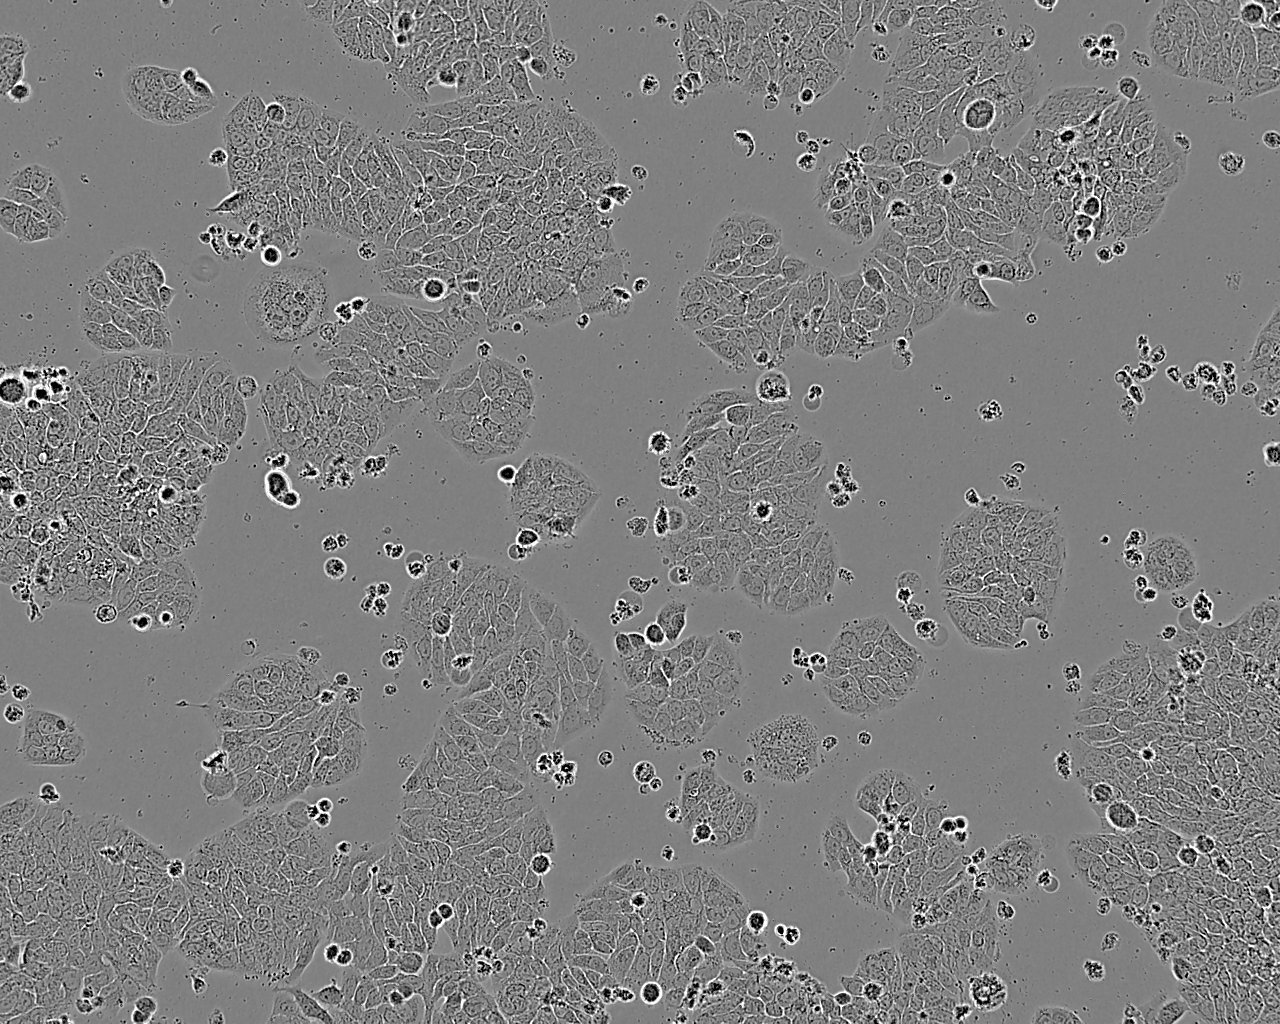 PG-4 (S+L-) epithelioid cells猫星形脑胶质细胞系,PG-4 (S+L-) epithelioid cells